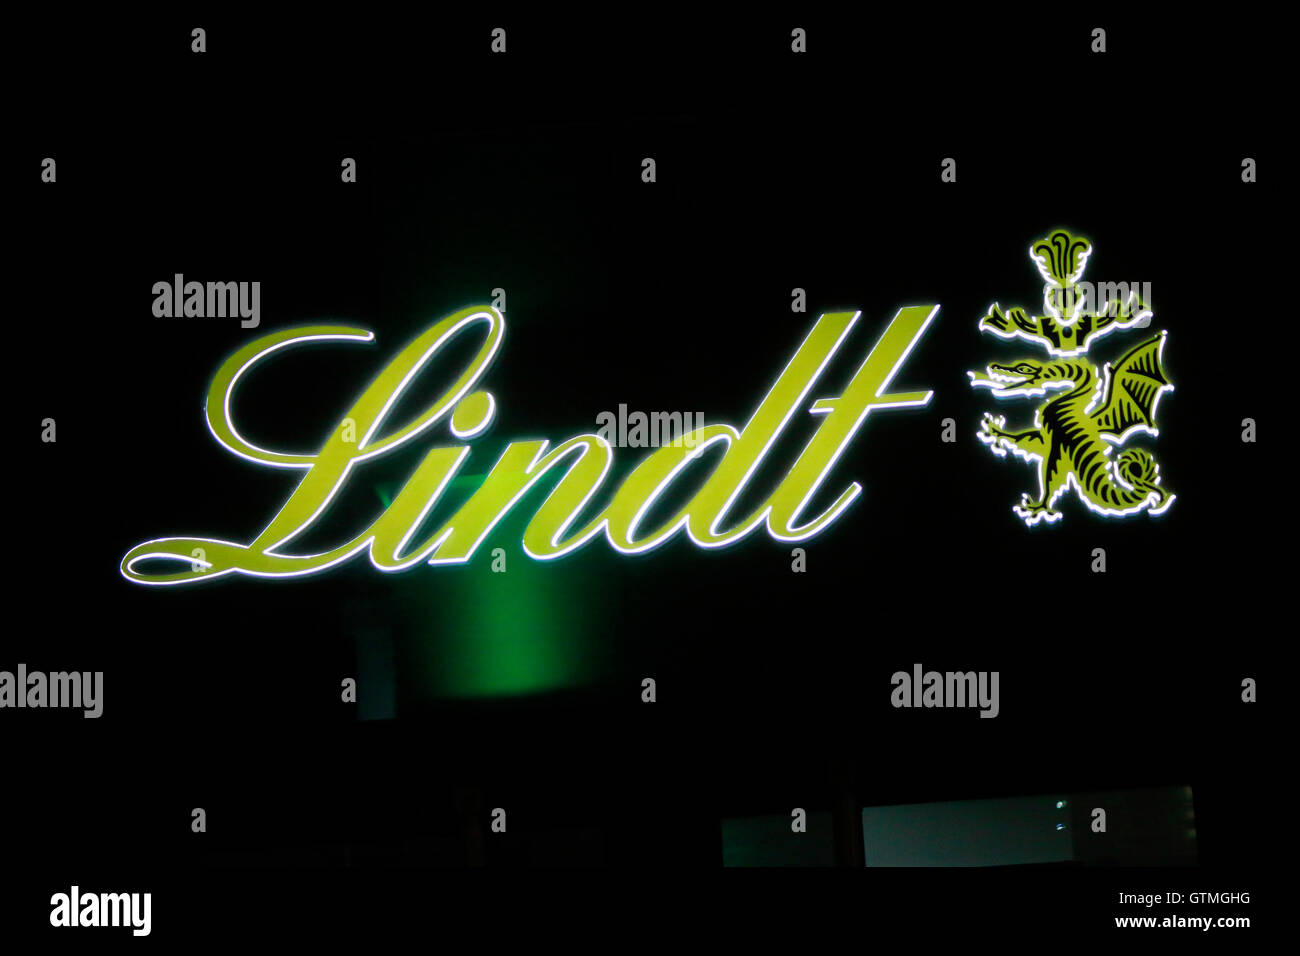 lindt hello logo